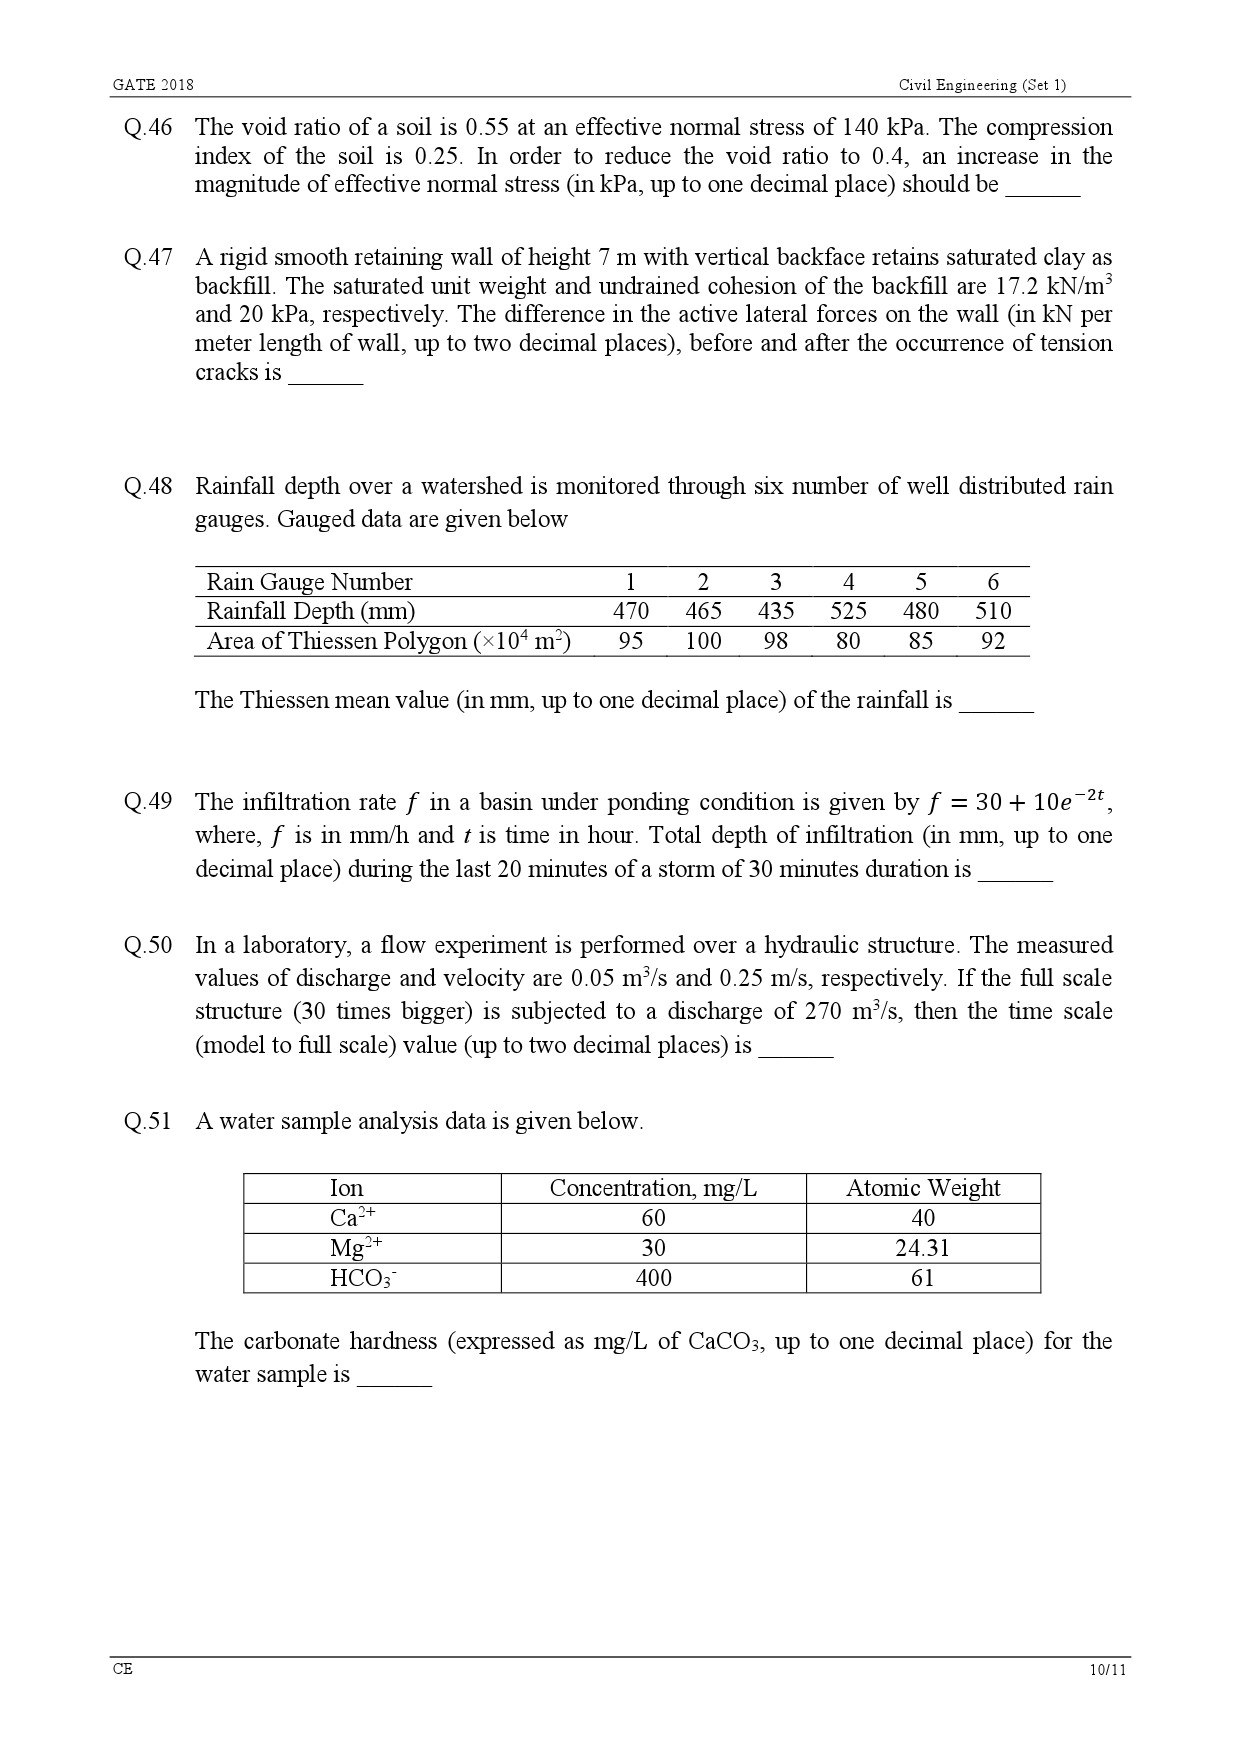 GATE Exam Question Paper 2018 Civil Engineering Set 1 13